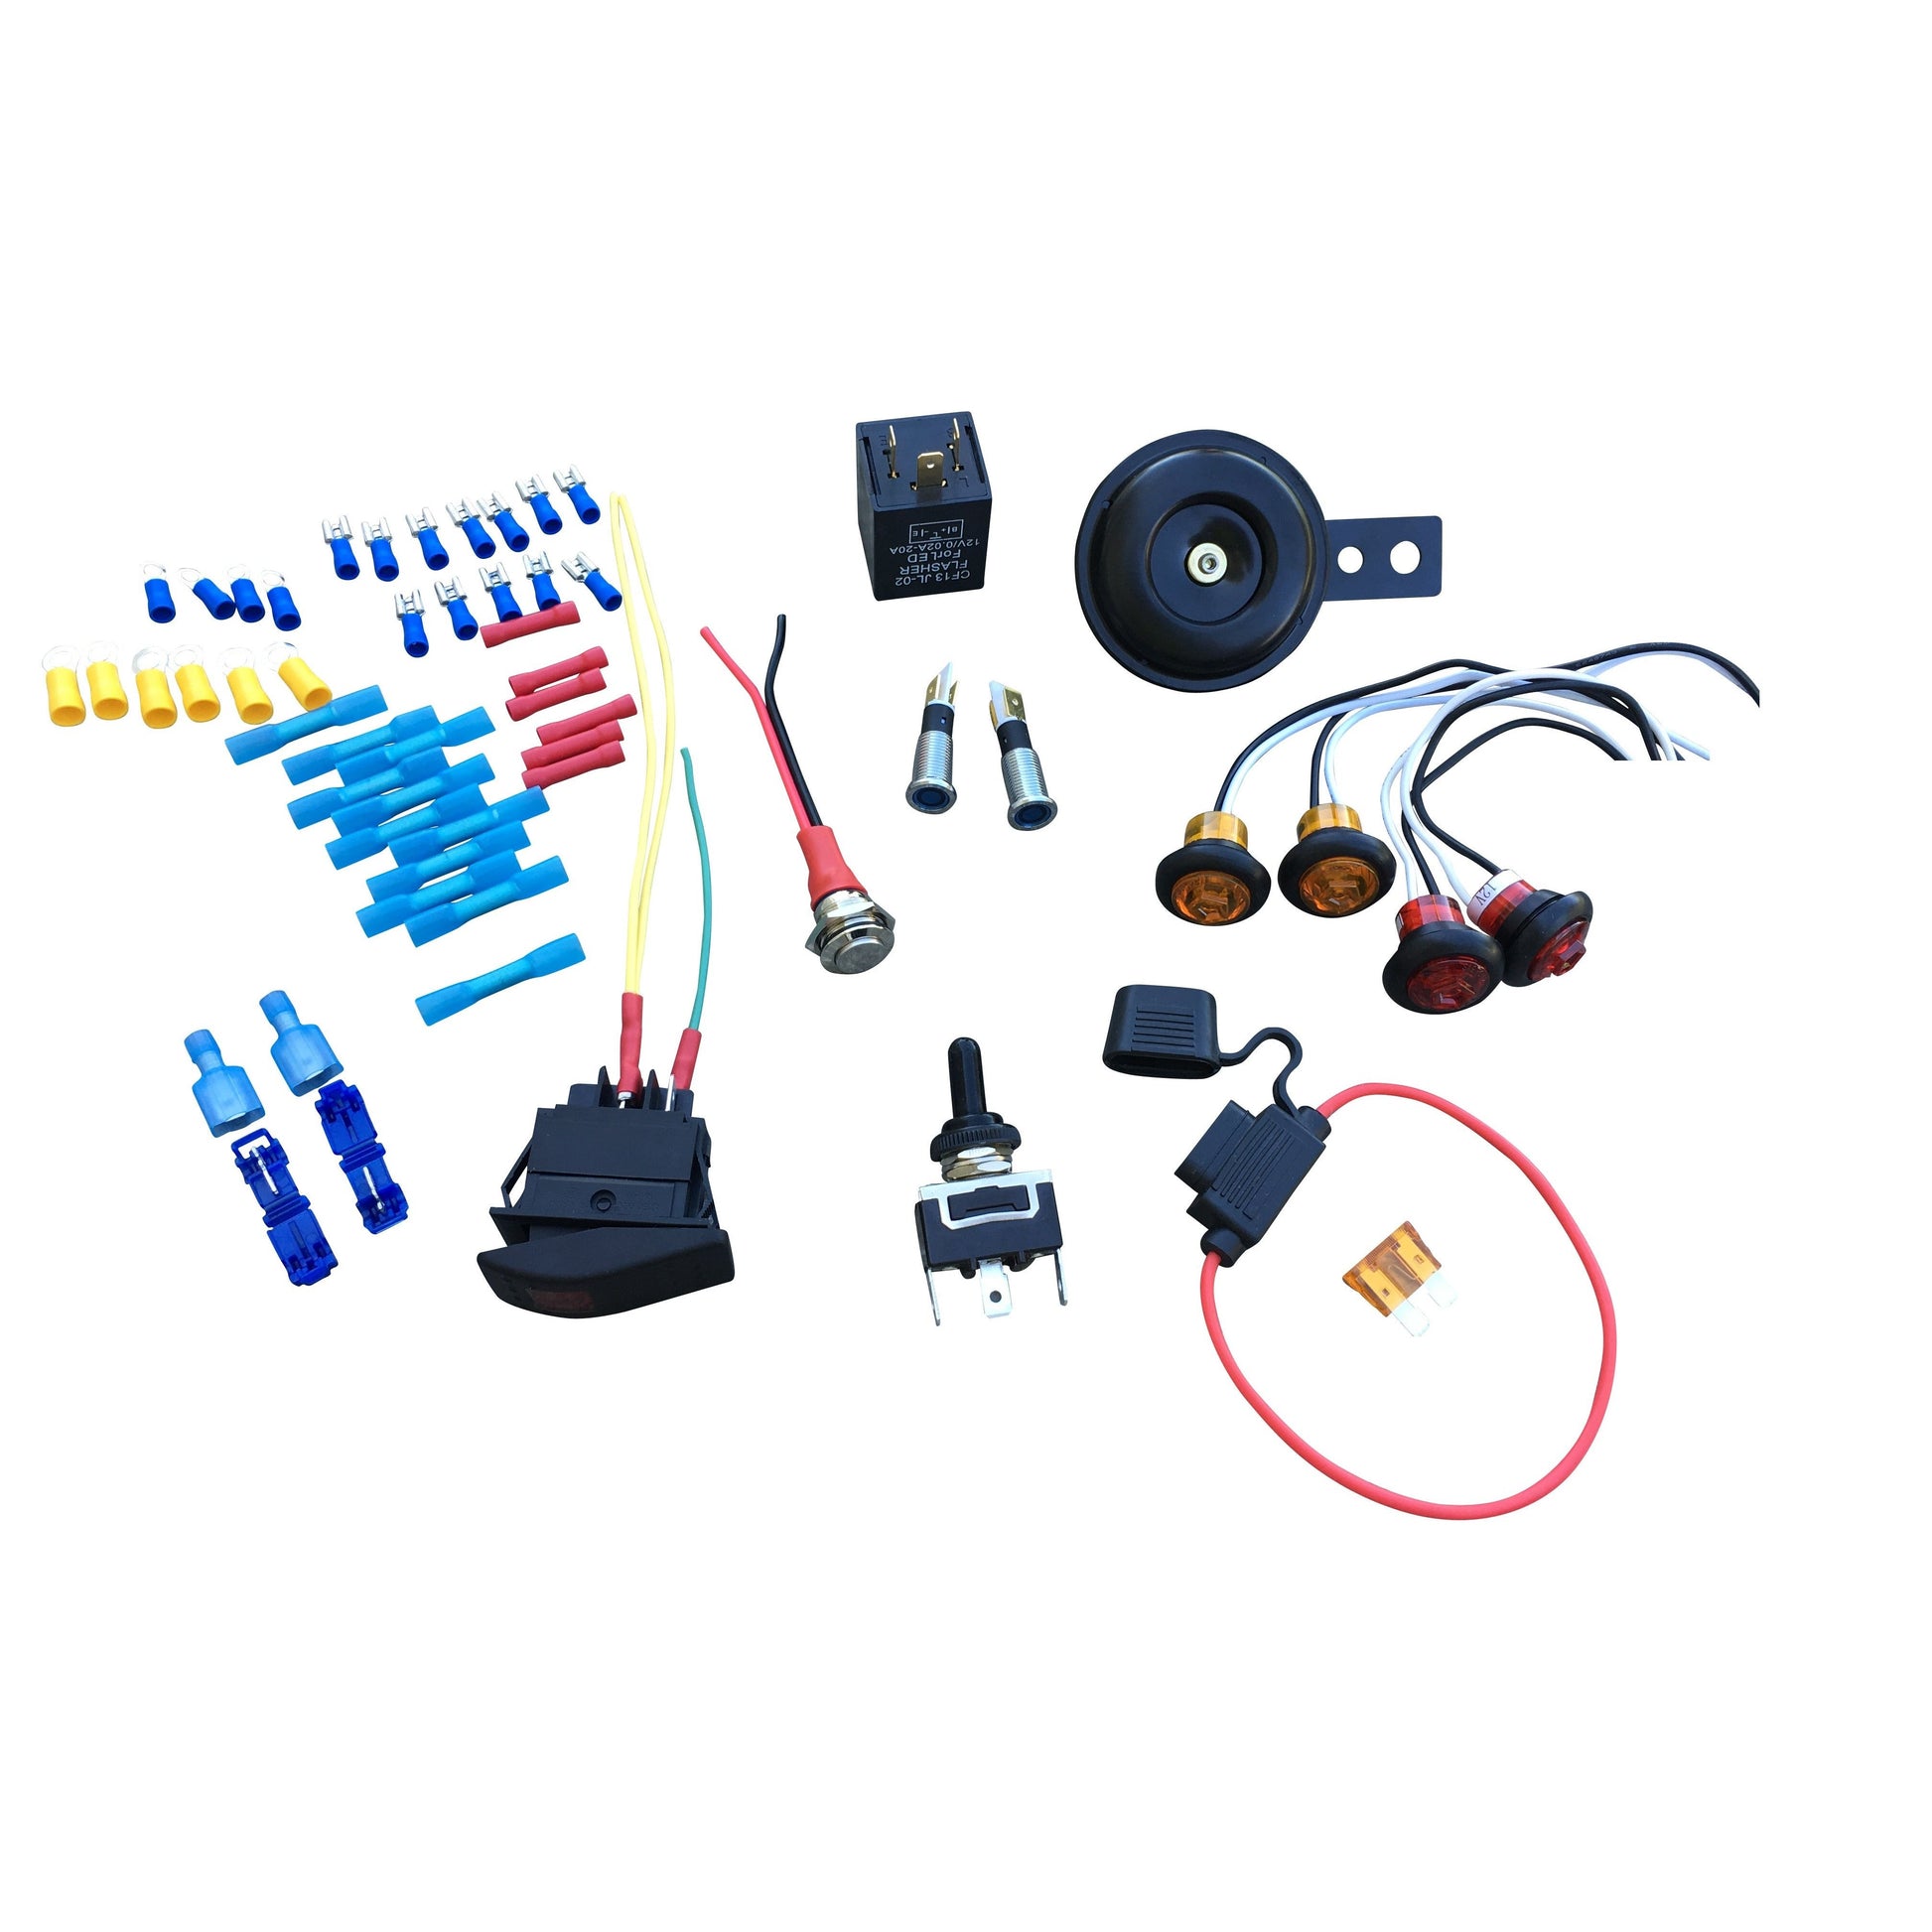 DIY Turn Signal Kit - Universal Kit for all machines.